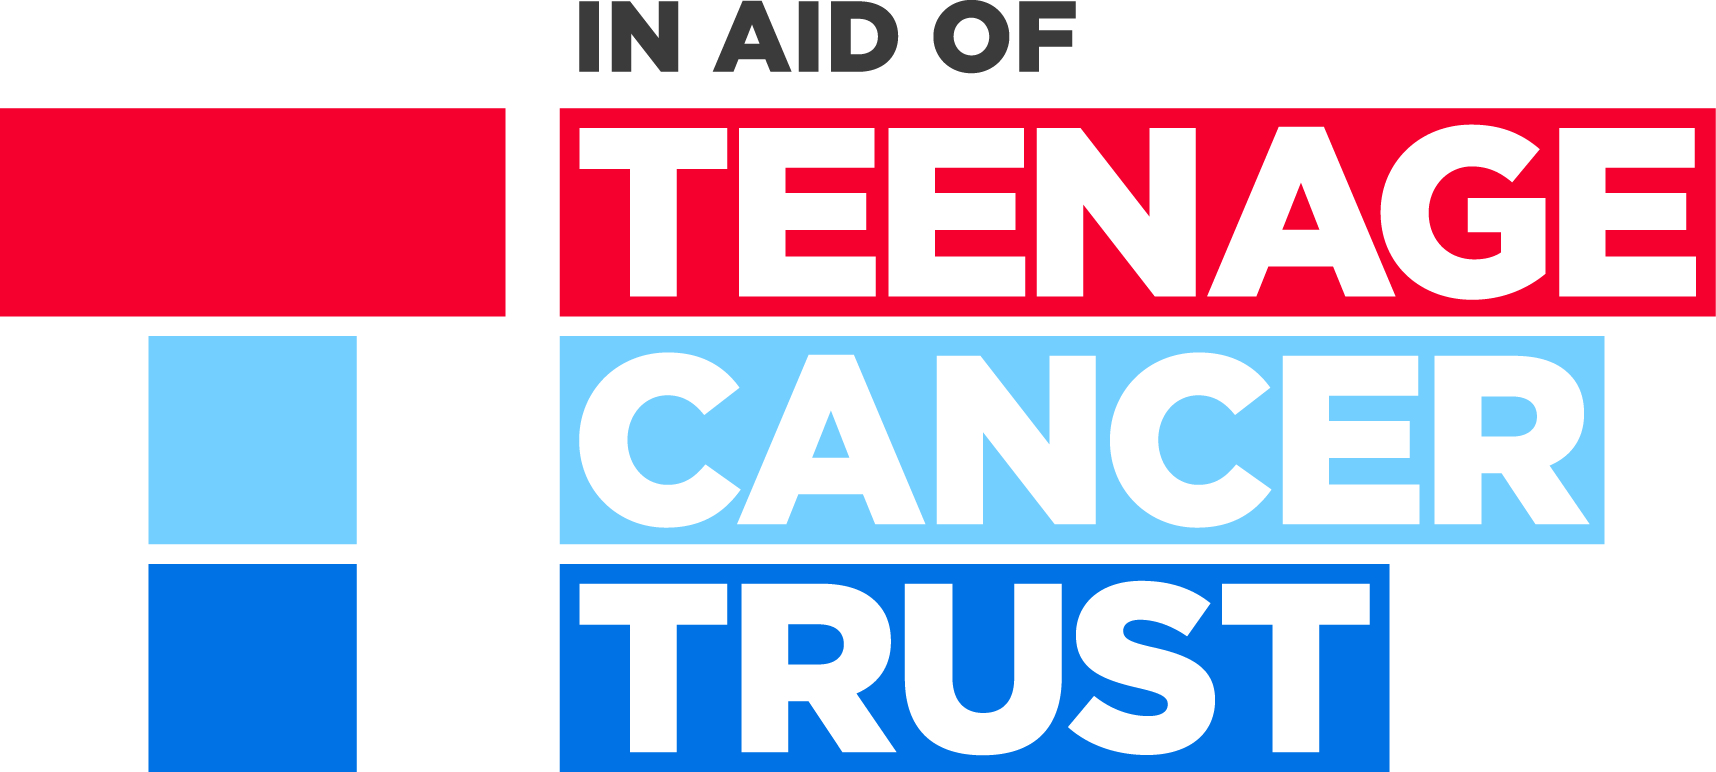 Teenage Cancer Trust in aid of logo